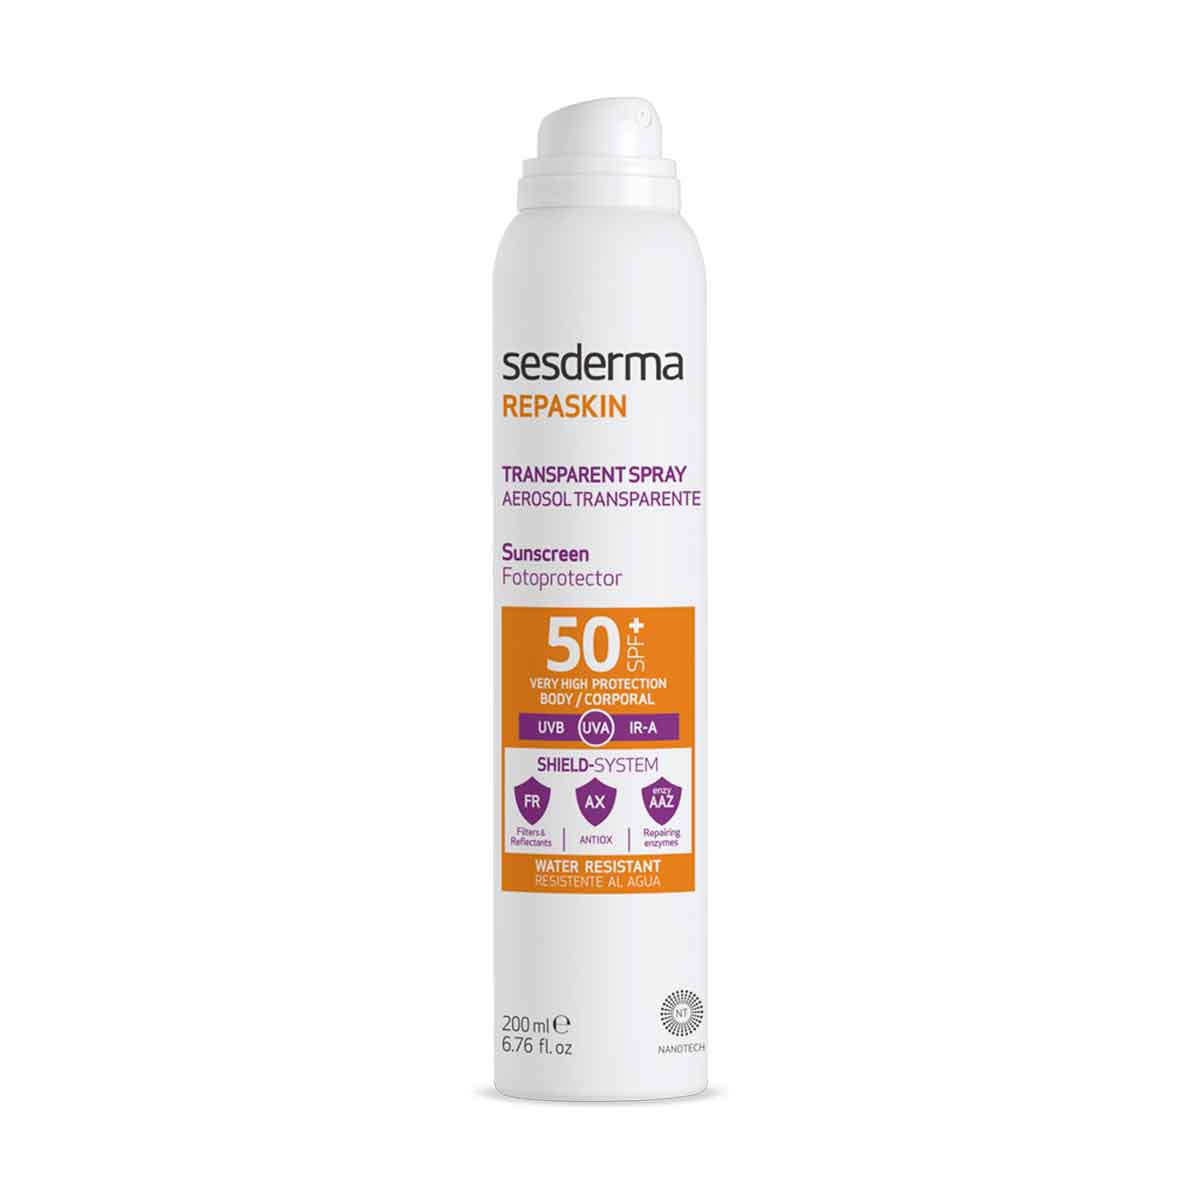 REPASKIN-Spray-Transparente-SPF50-de-Sesderma-PVPR-25,95€-(1)